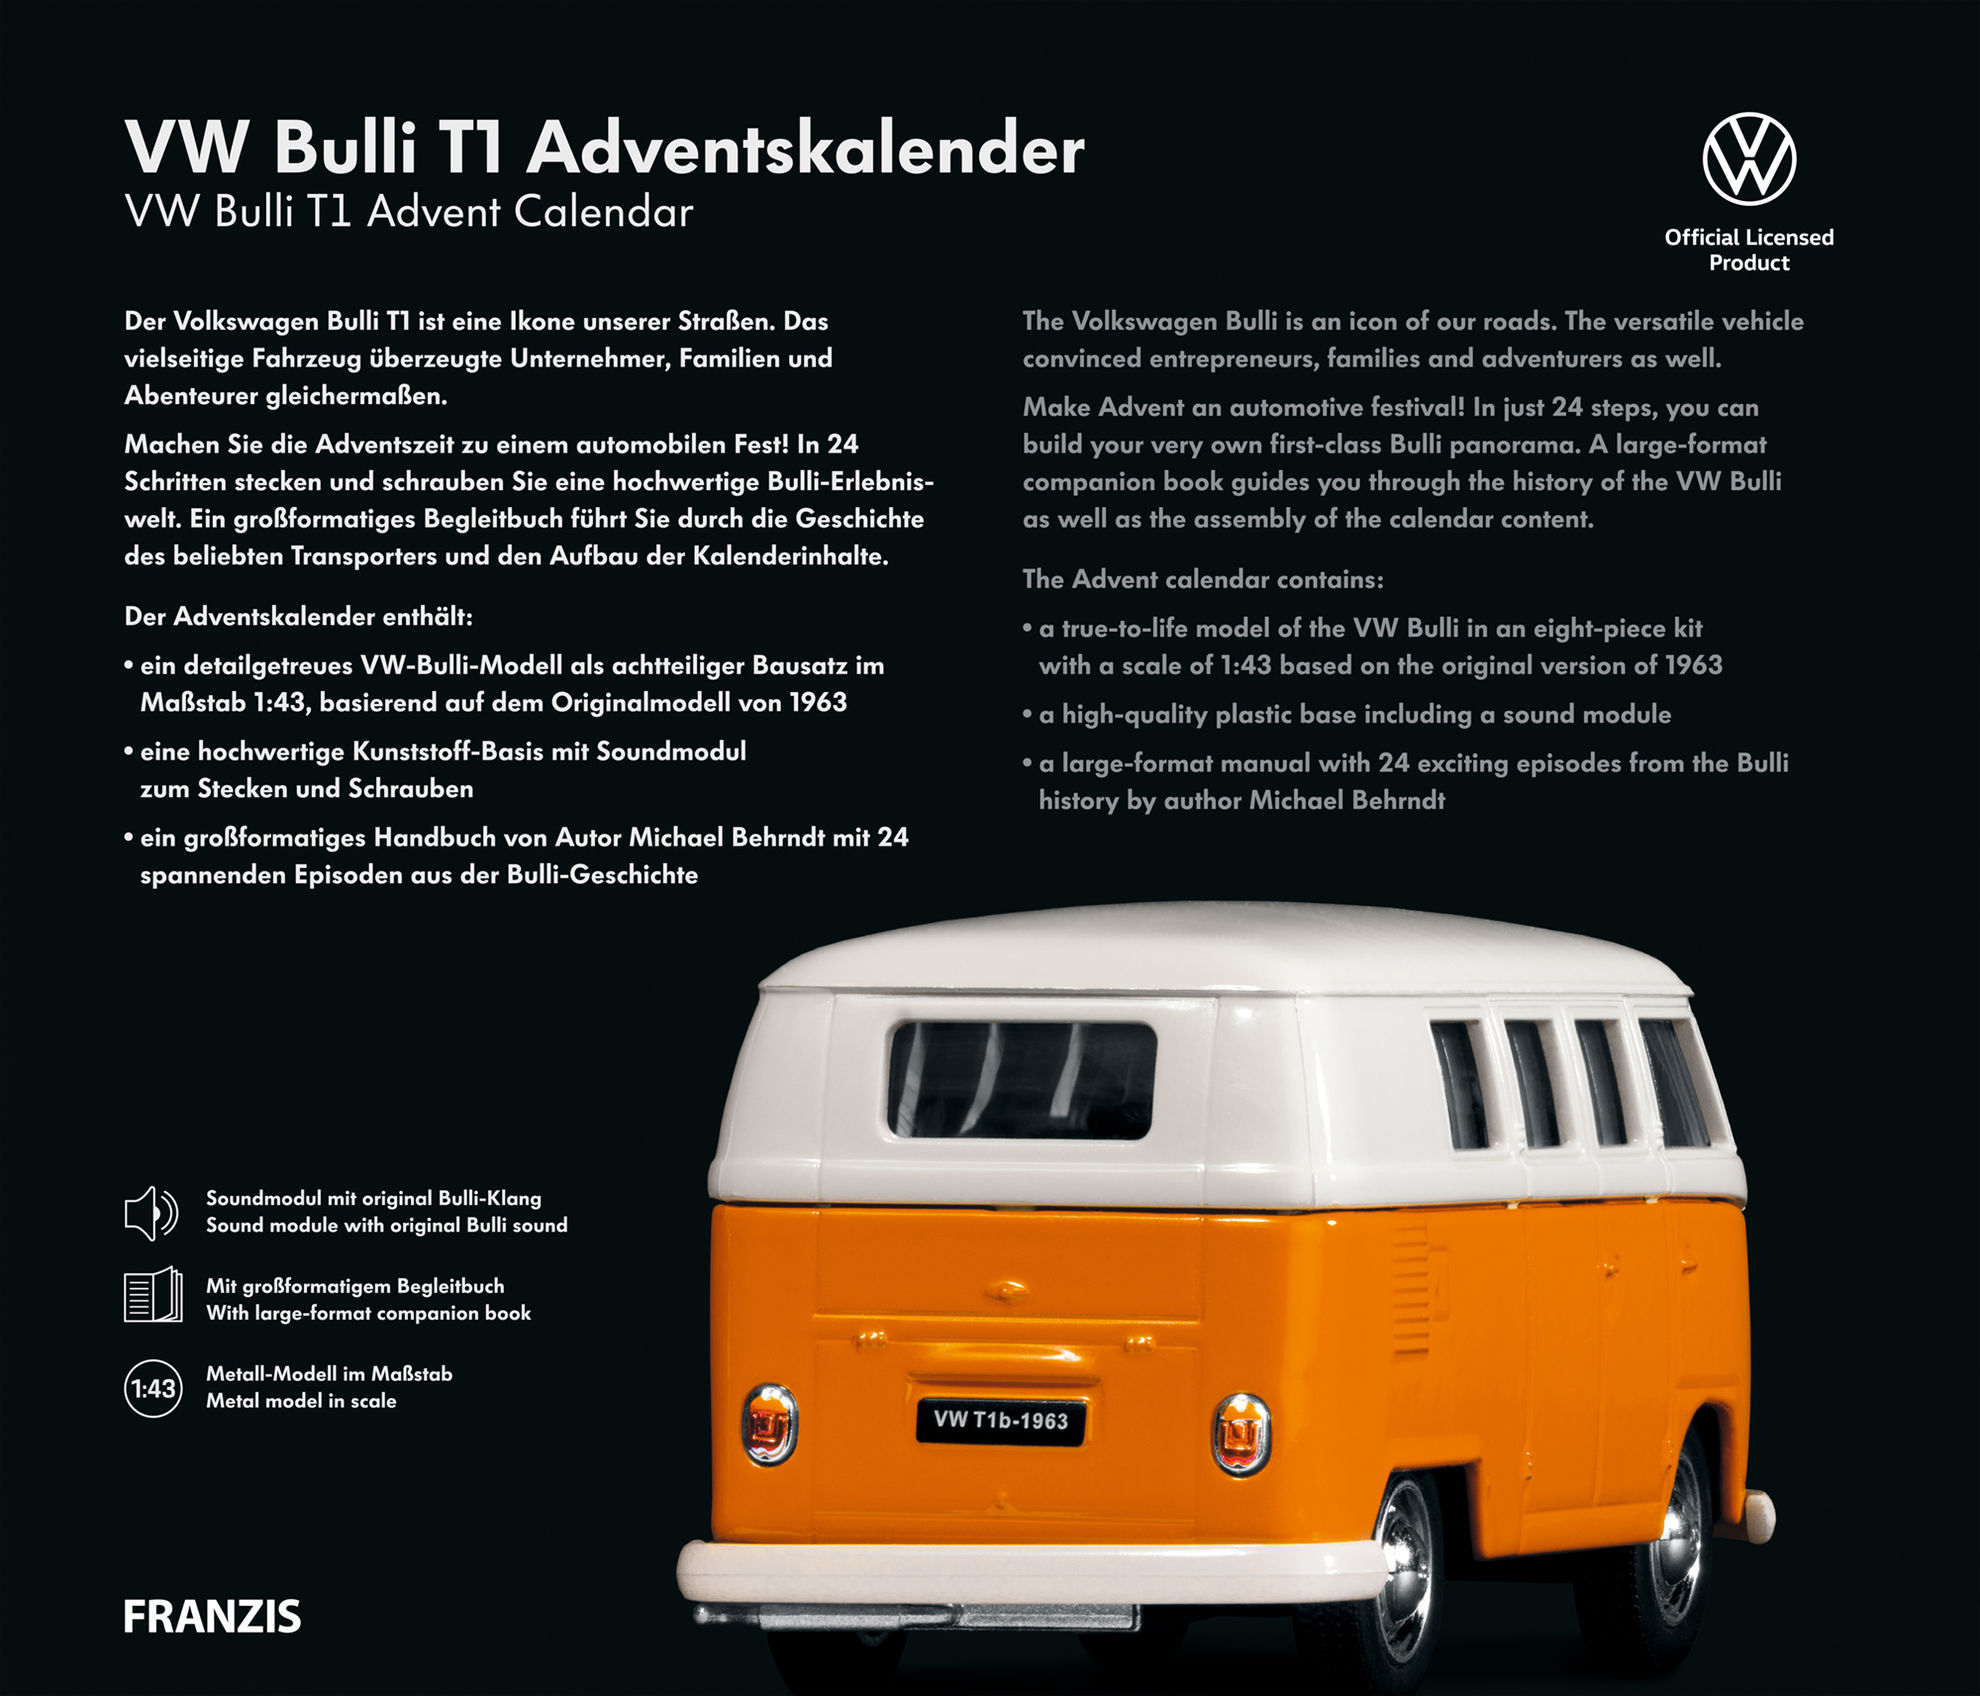 VW Bulli T1 Adventskalender jetzt bei Weltbild.de bestellen